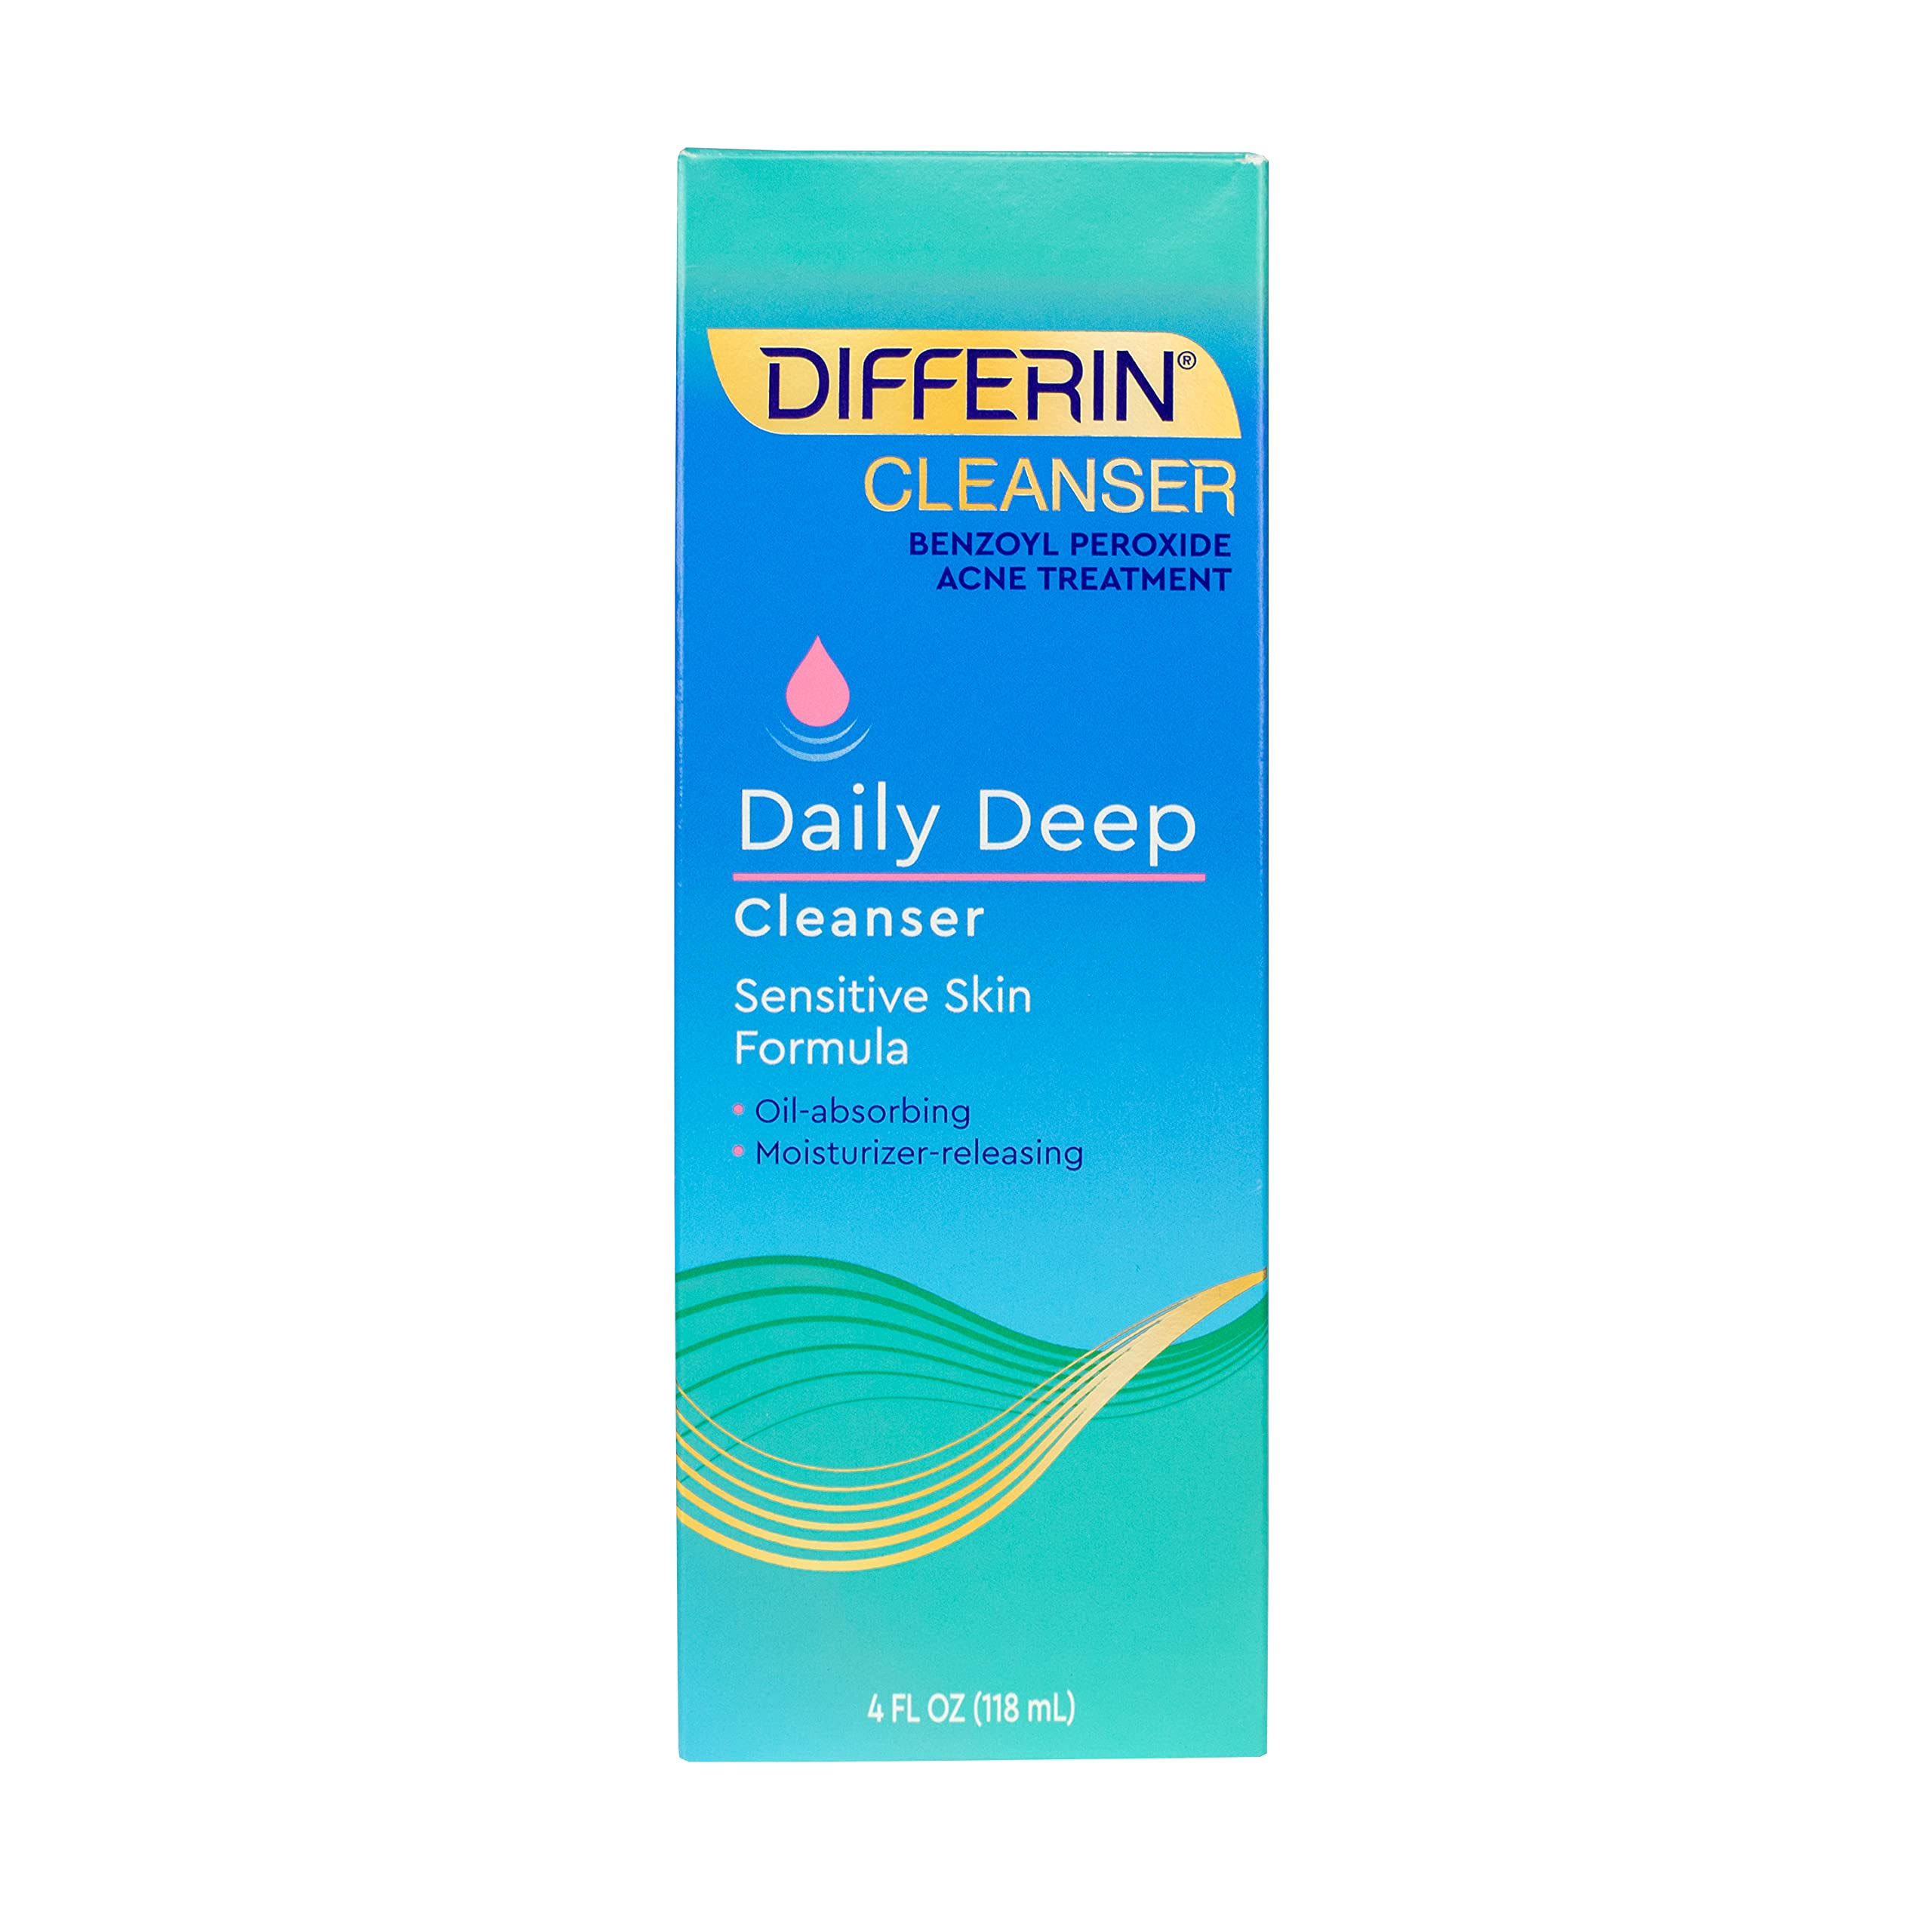 Differin Daily Deep Cleanser - Sensitive Skin Formula, 4oz